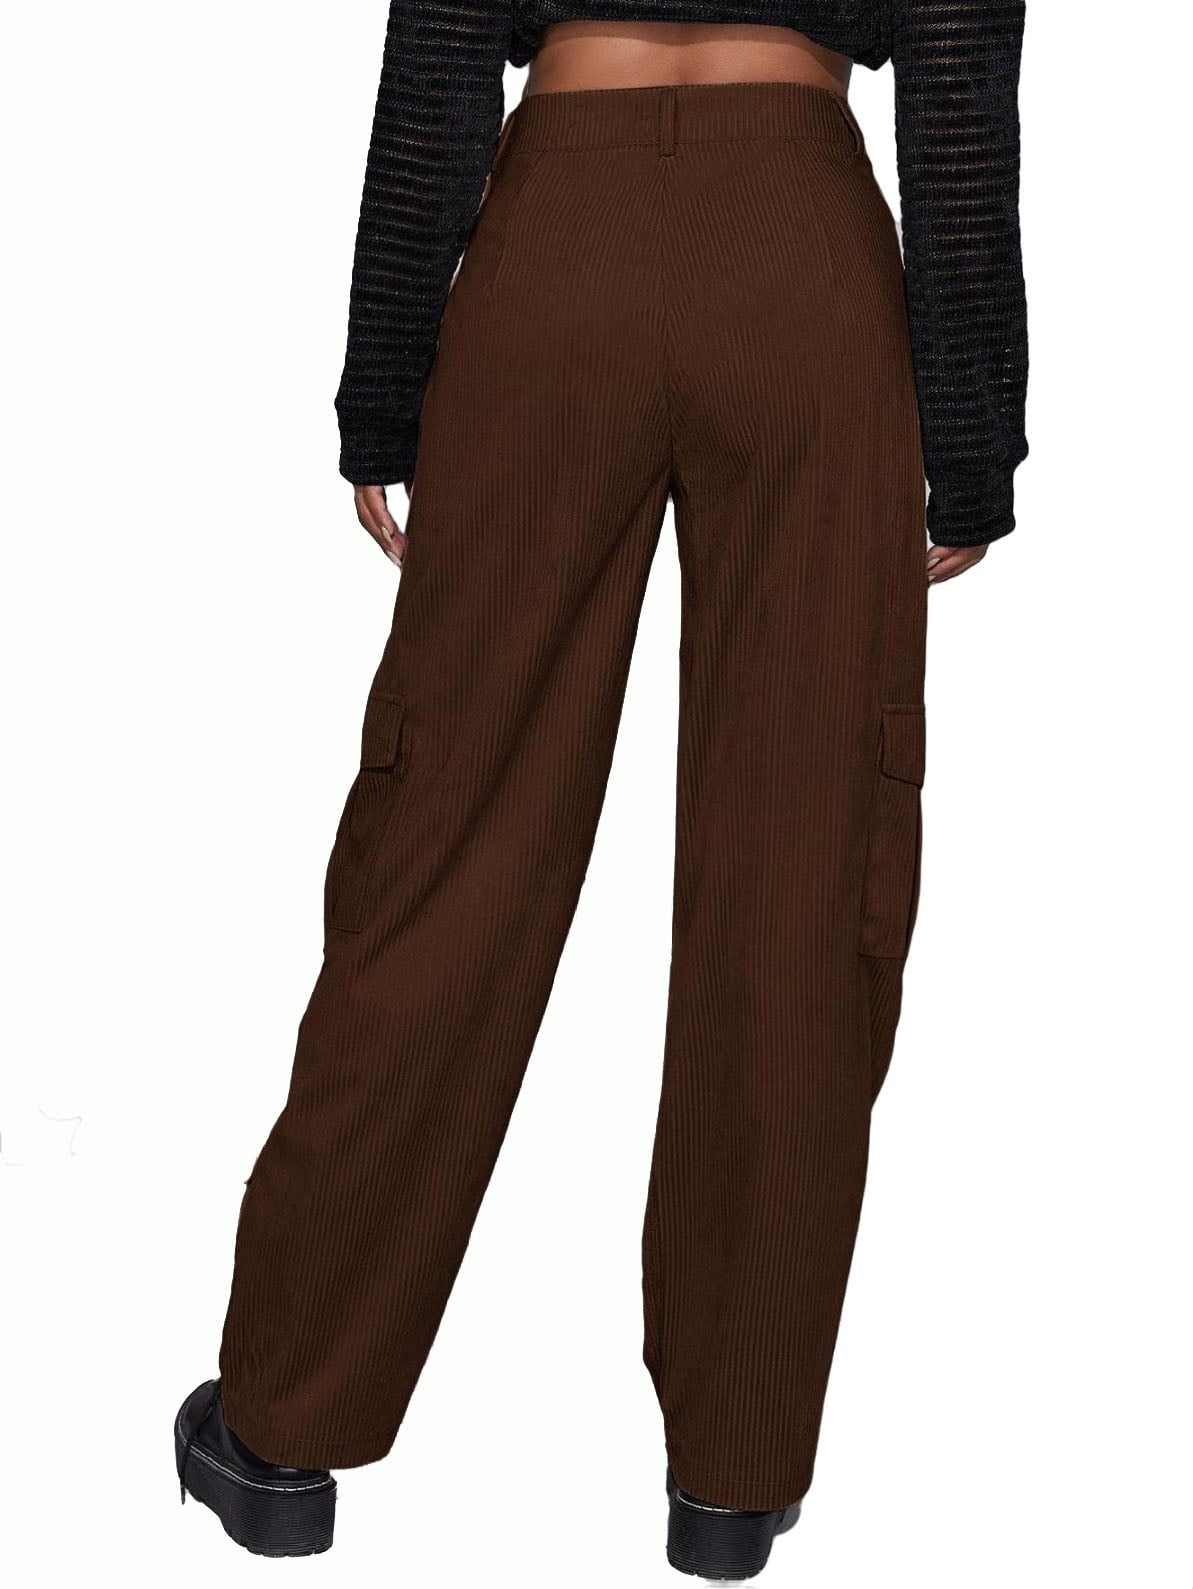 Womens Cargo Pants Pants Casual Zipper Fly High Waist Chocolate Brown XS 